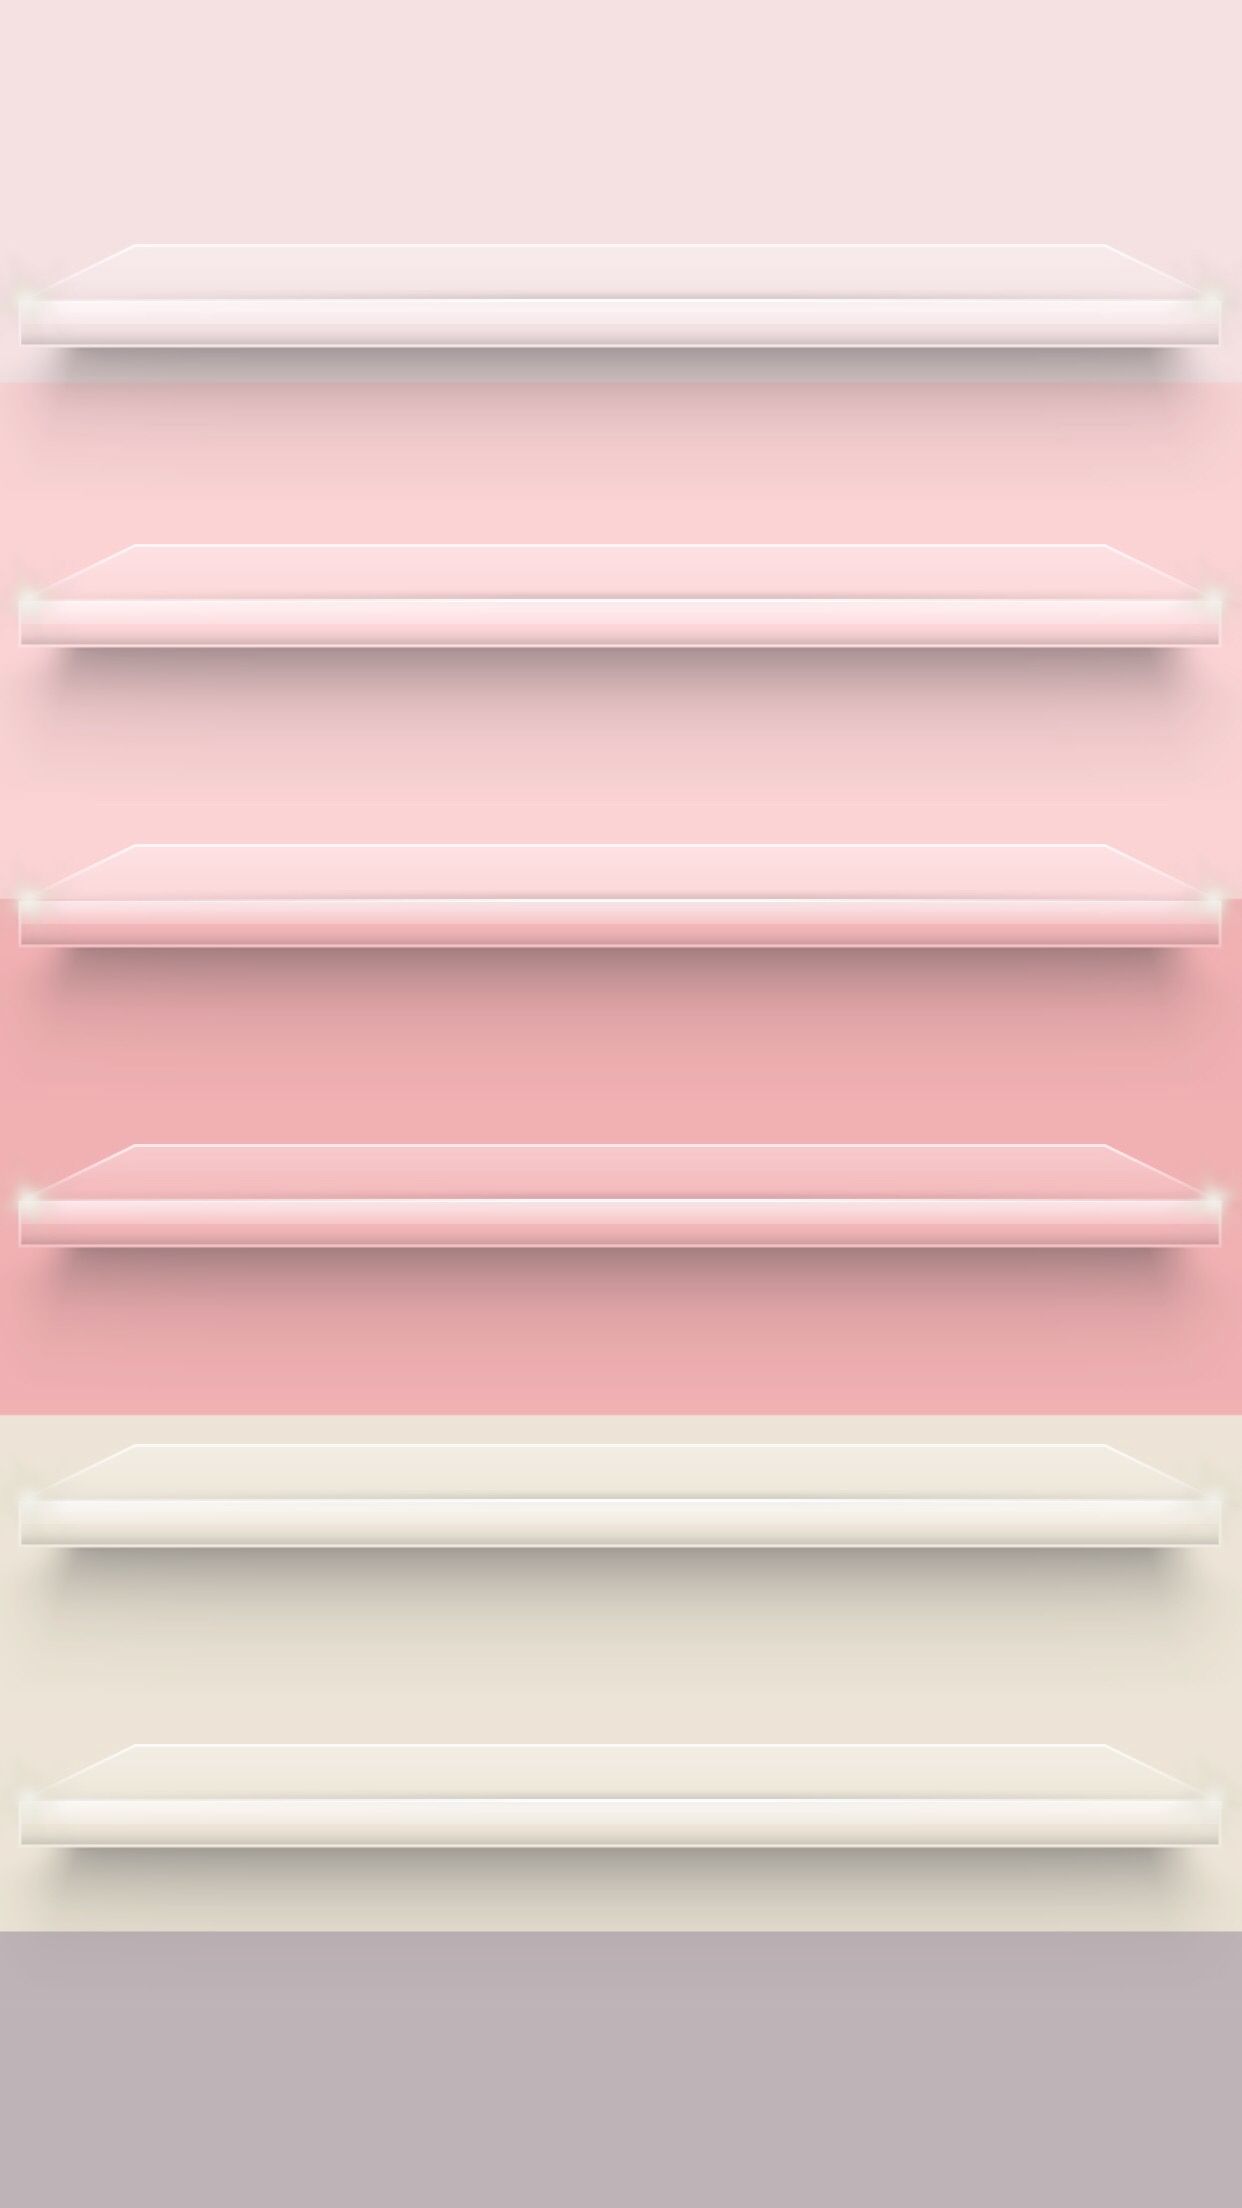 iphone home wallpaper,regal,rosa,regale,linie,möbel